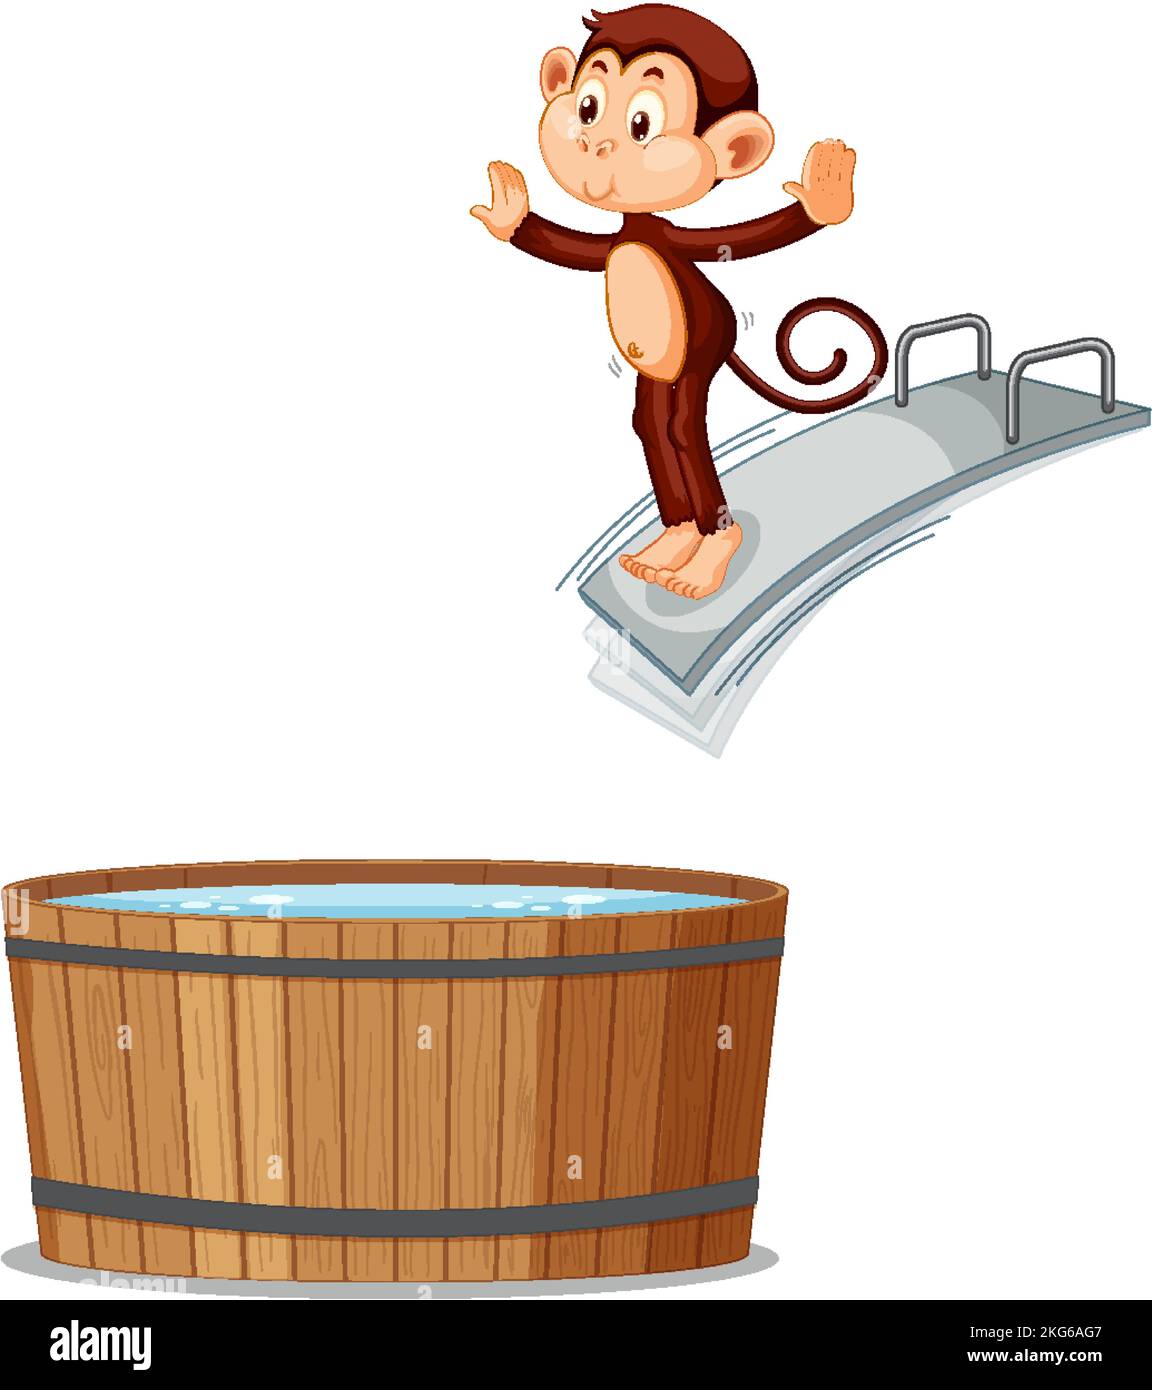 Monkey jumping on diving board illustration Stock Vector